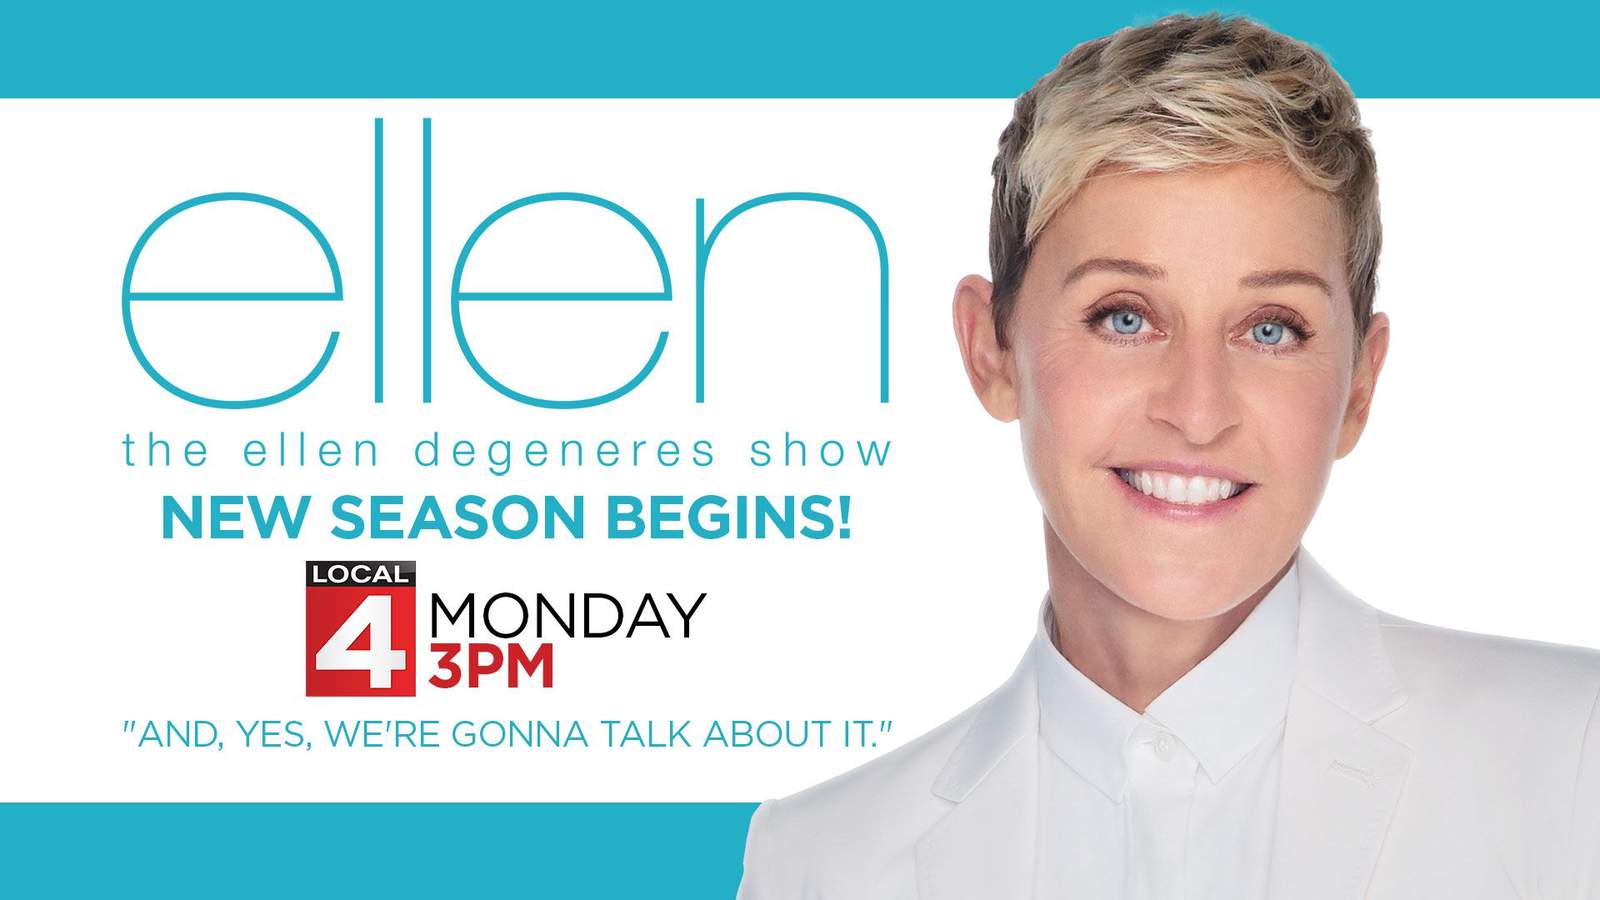 The Ellen DeGeneres Show returns for a new season